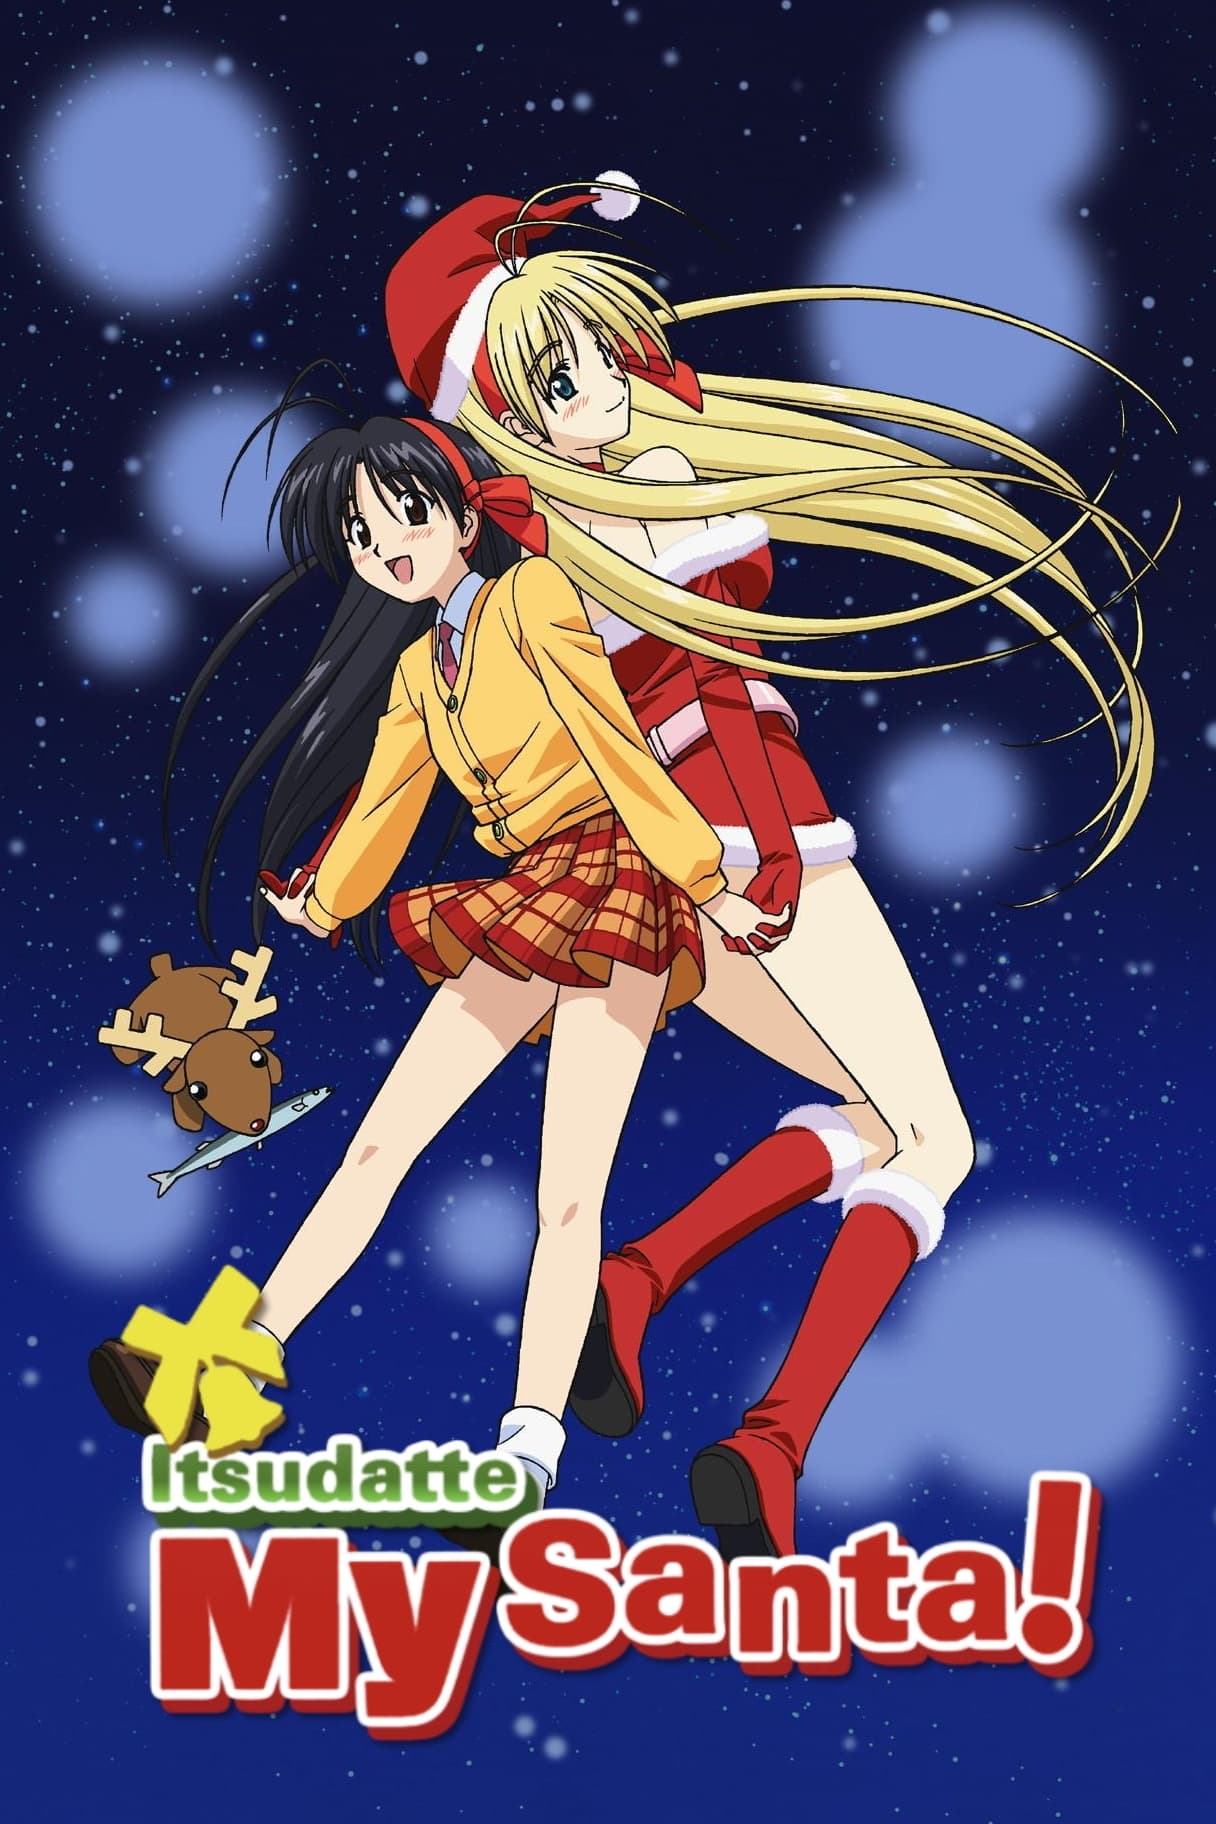 Itsudatte My Santa! (2005)